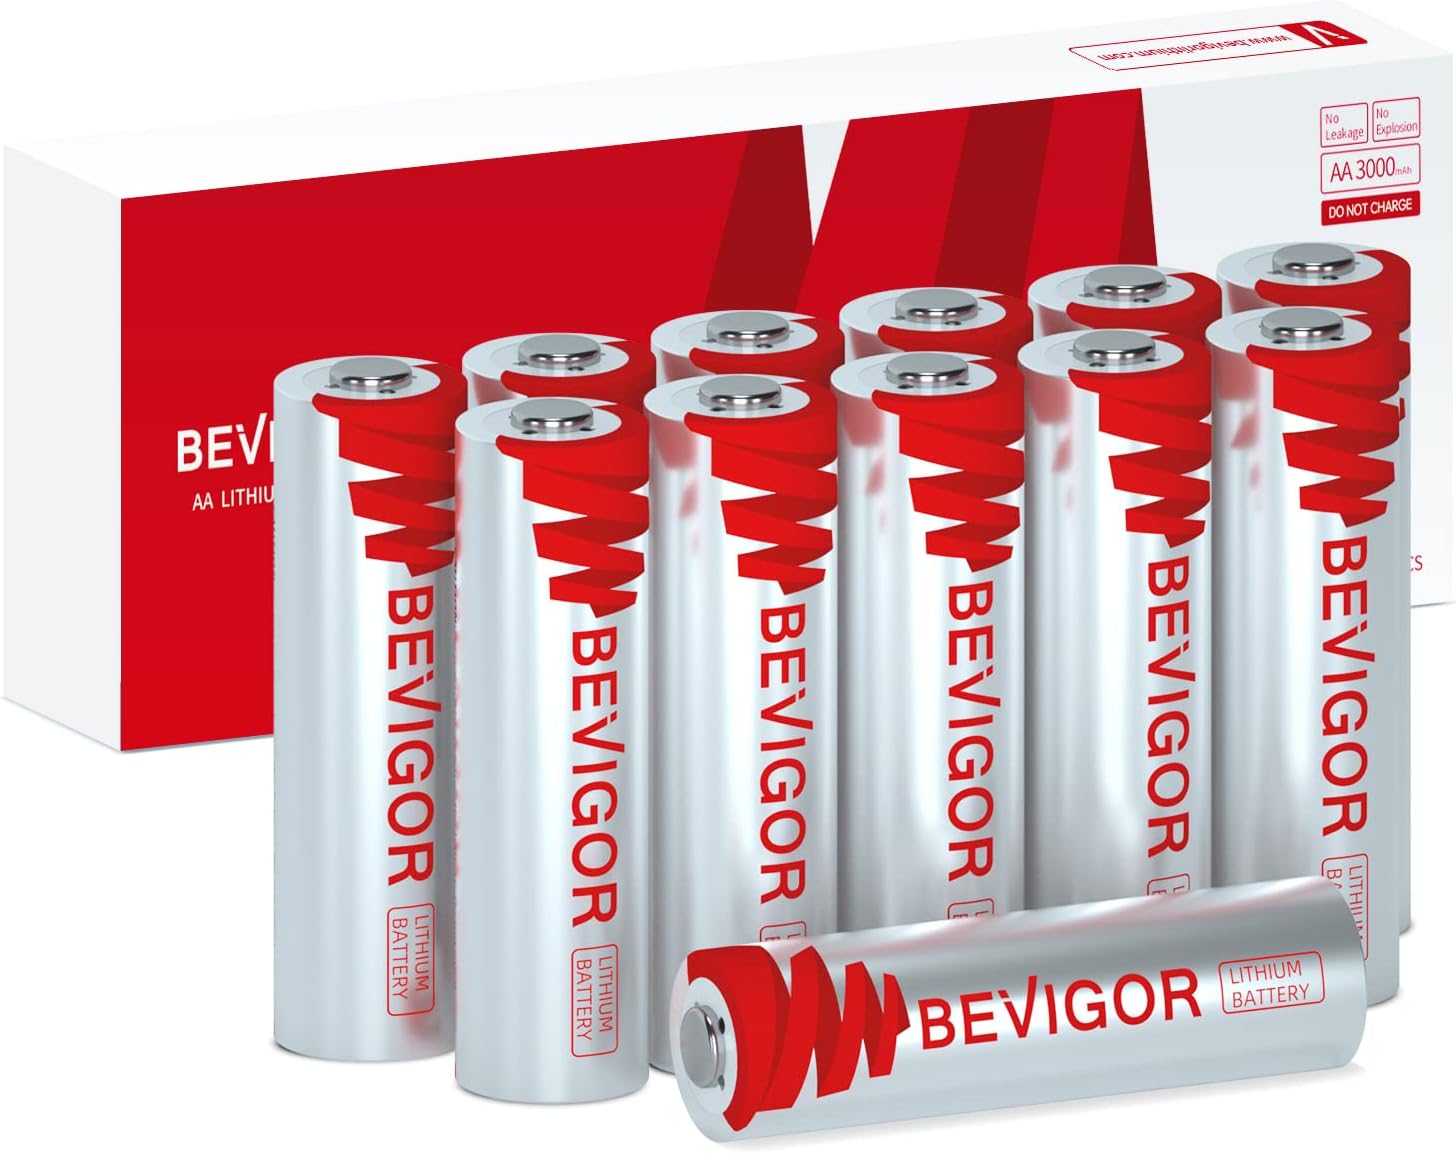 BEVIGOR Lithium Batteries AA Size